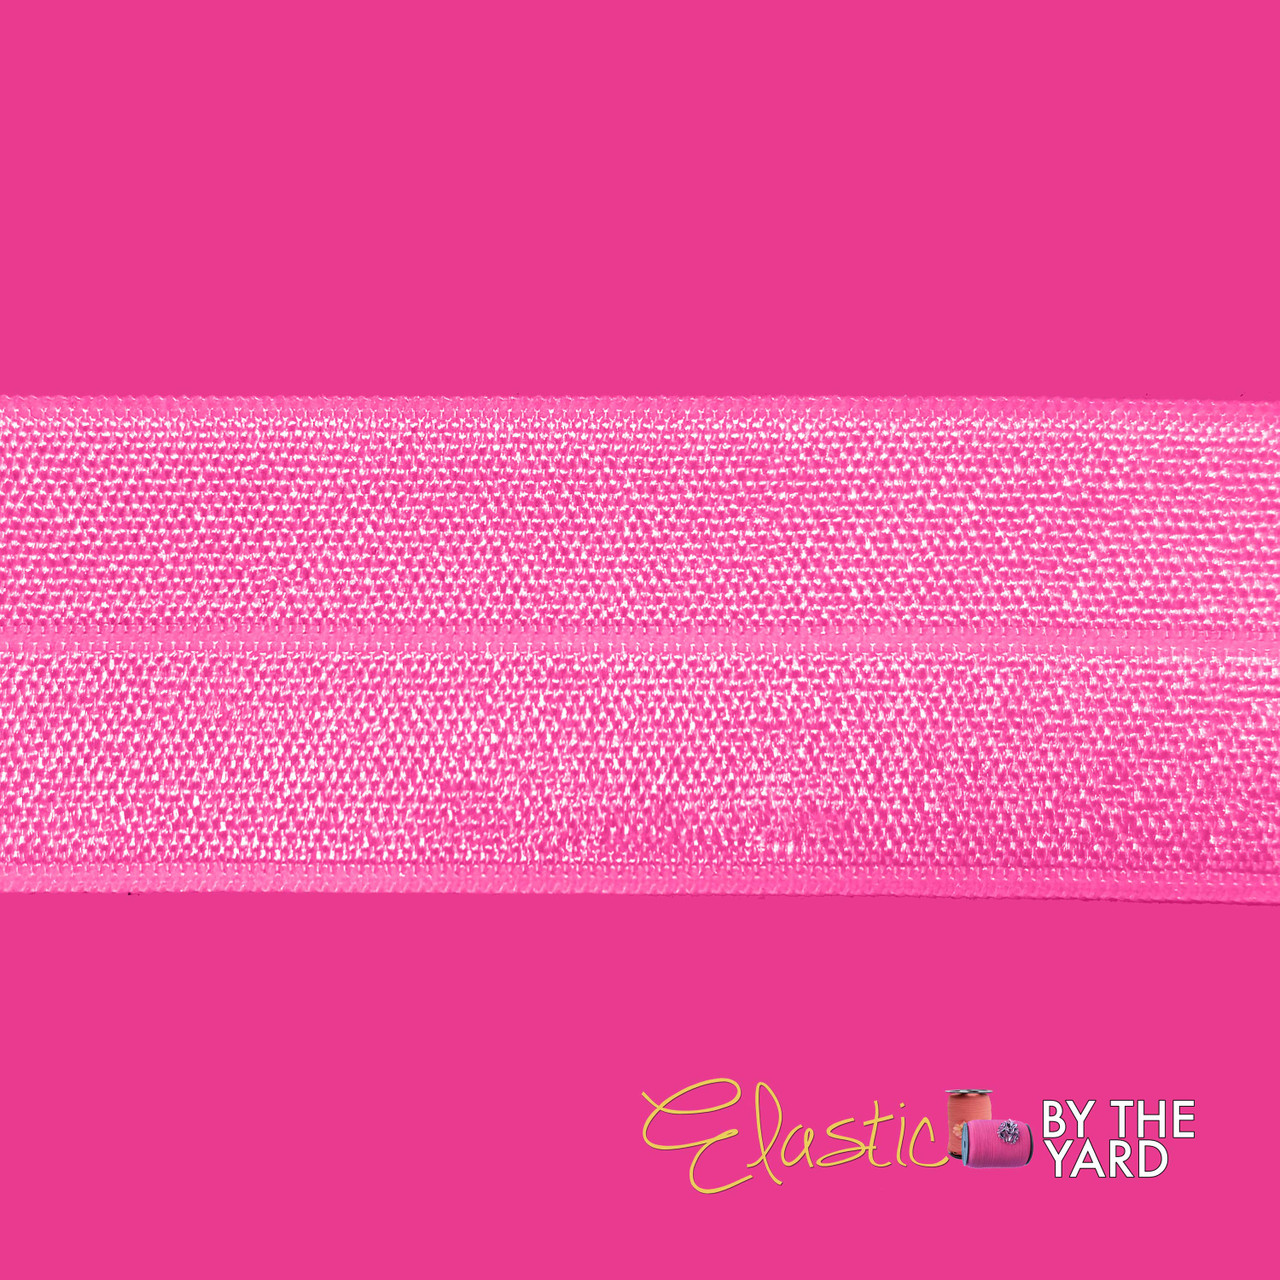 1 inch elastic fold over, #155 geranium pink elastic ribbons in